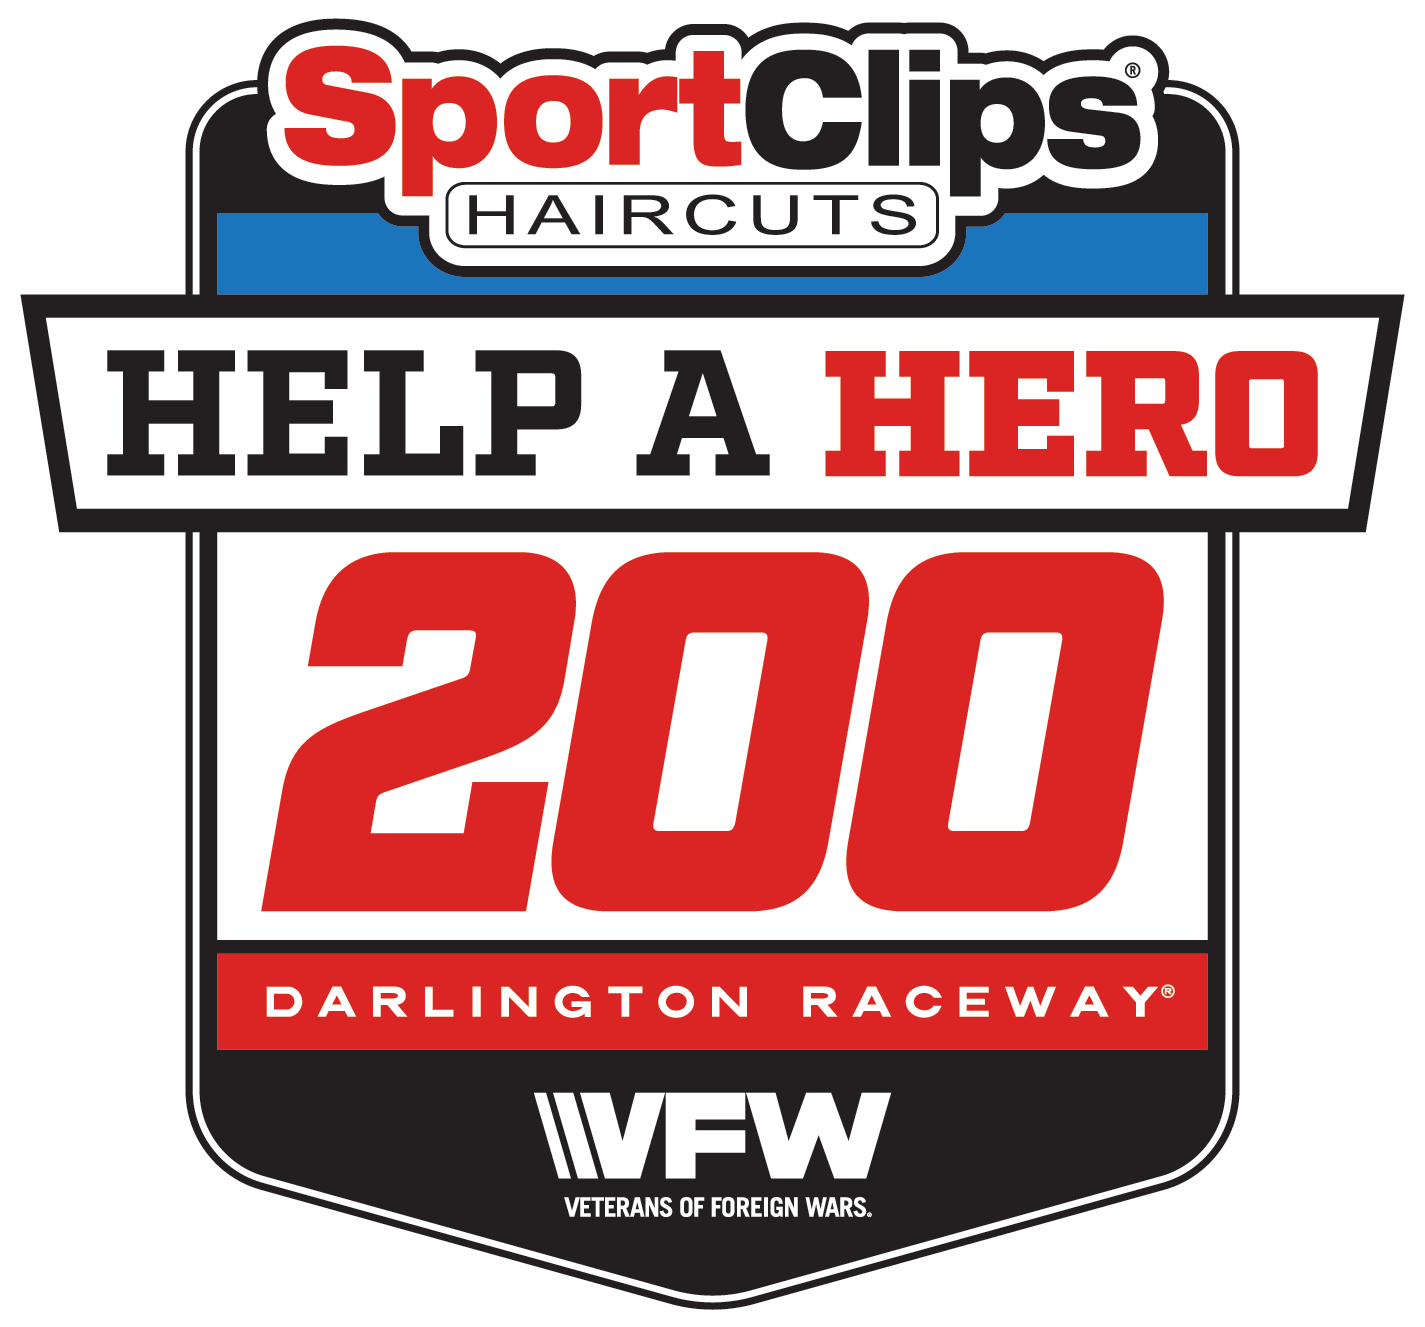 Sports Clips Haircuts VFW Help a Hero 200